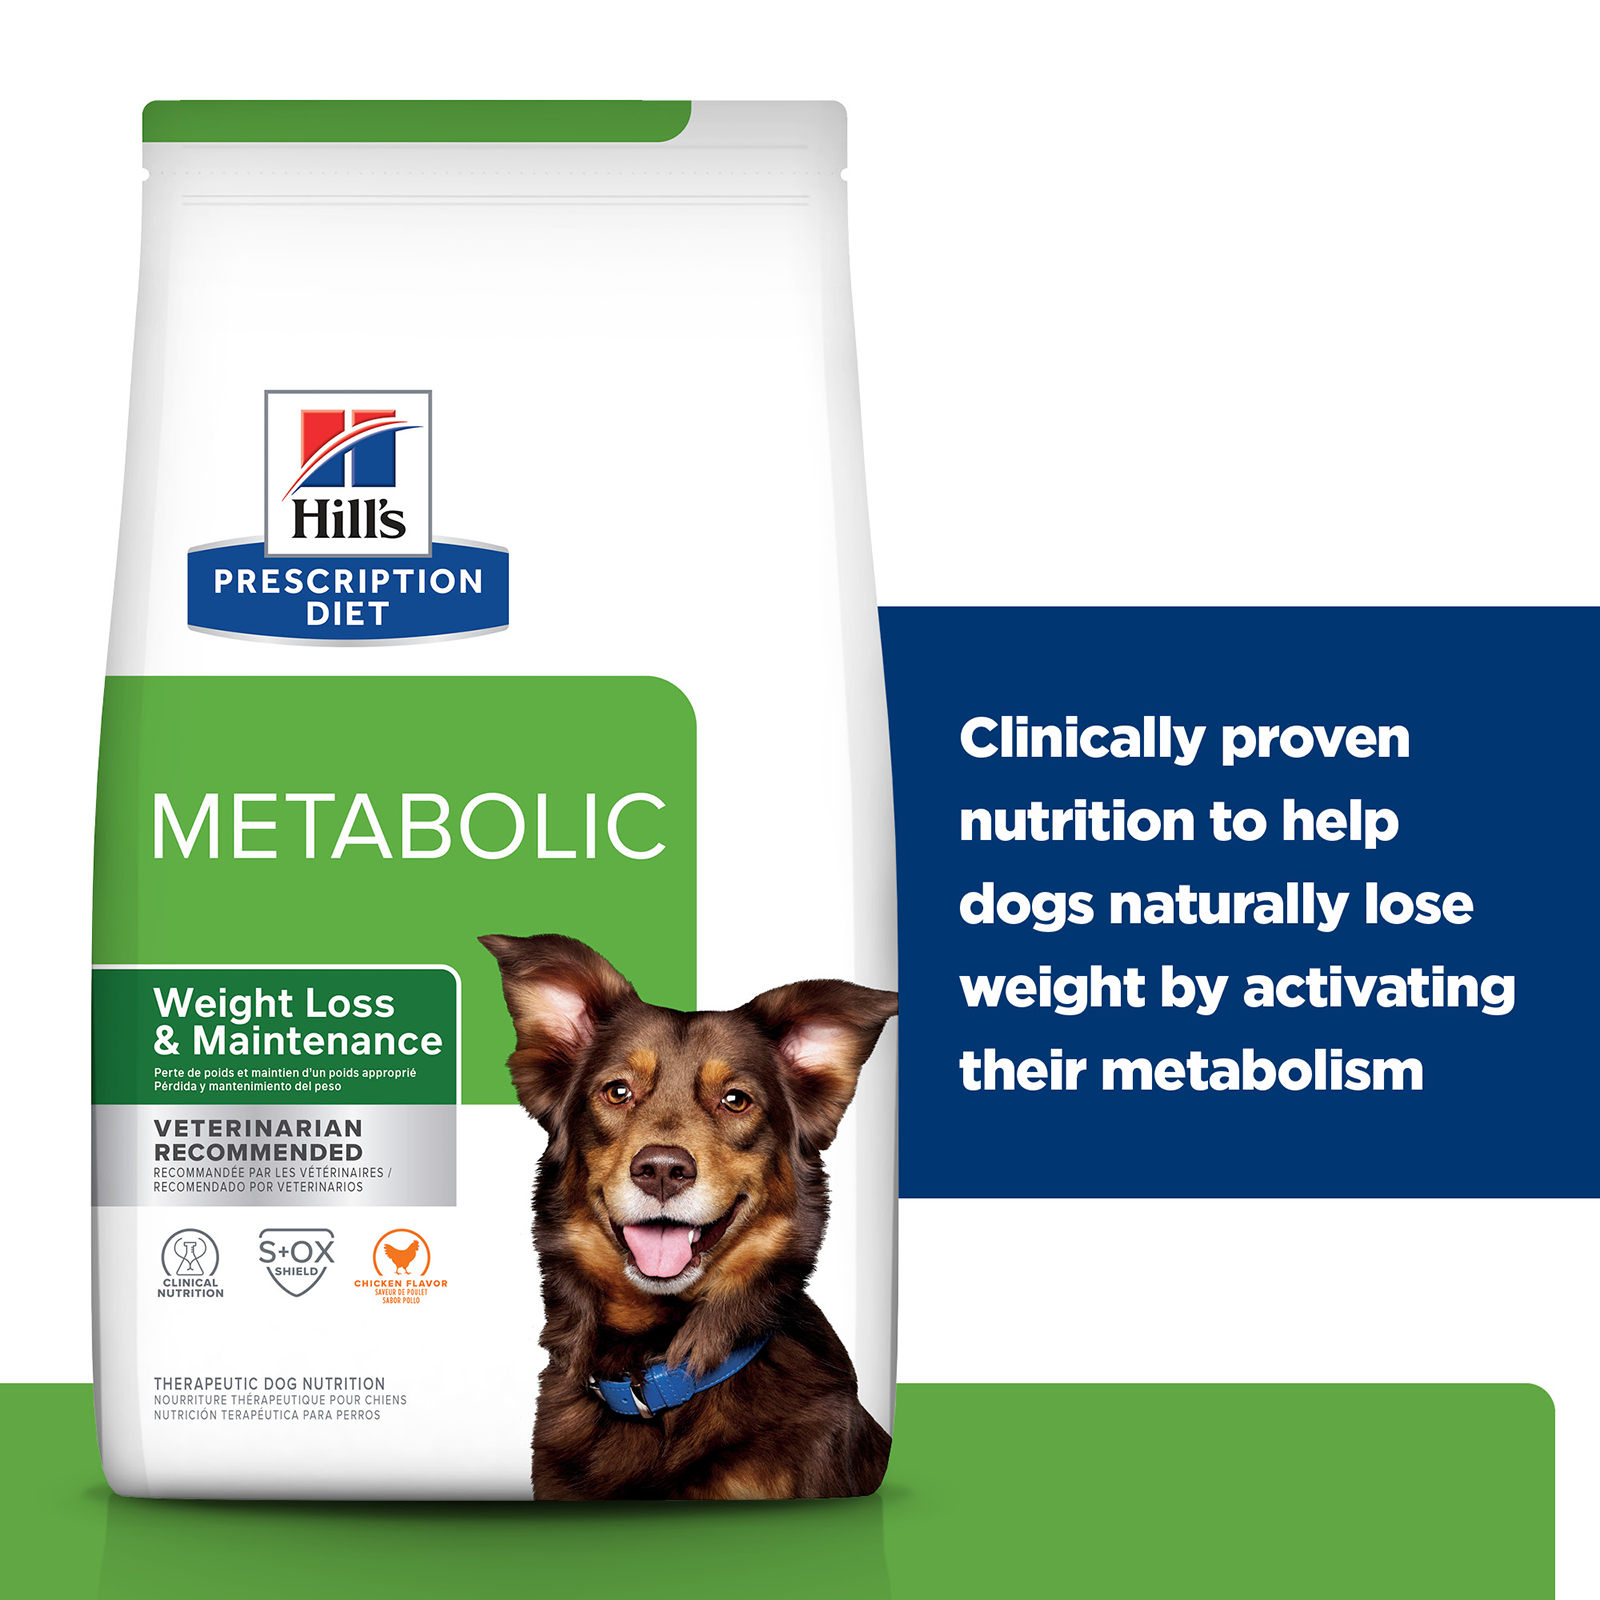 Hill's Prescription Diet Dog Food Metabolic Weight Loss & Maintenance